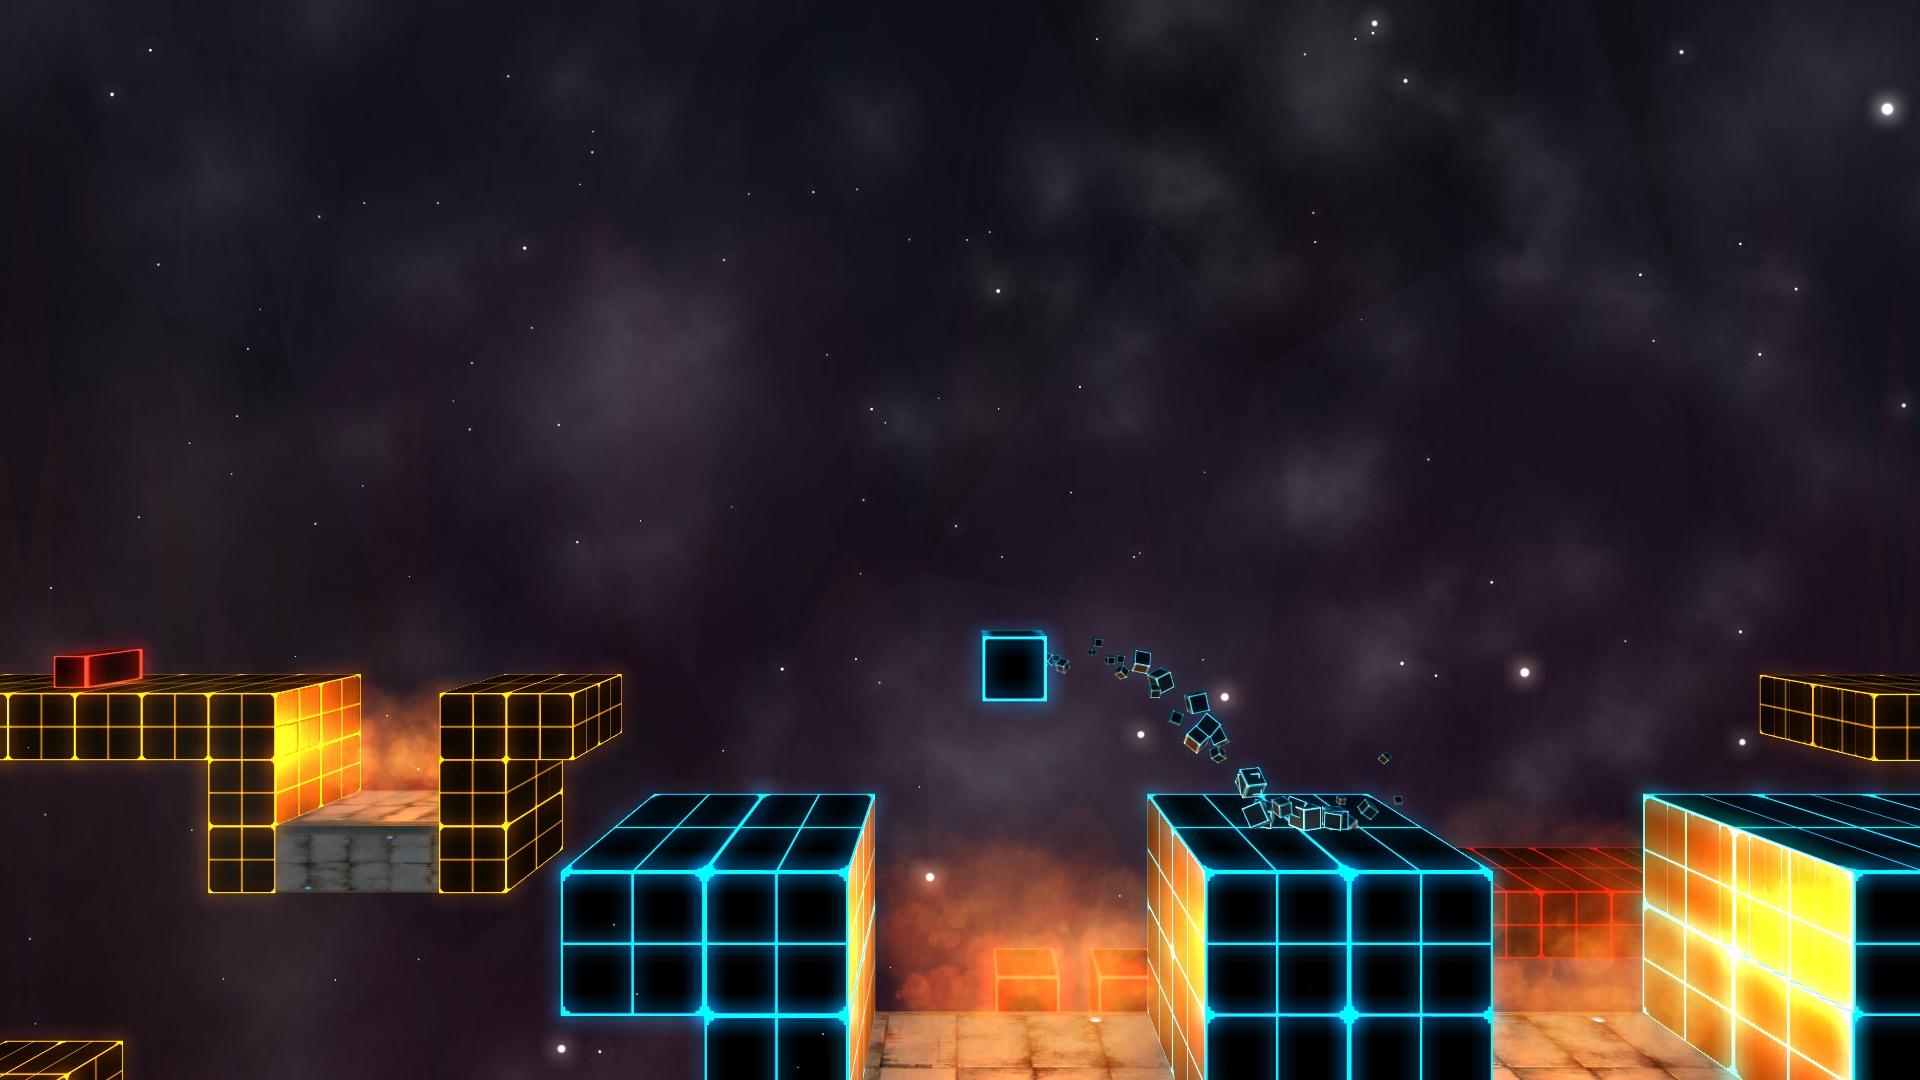 Screenshot №10 from game Cube Runner